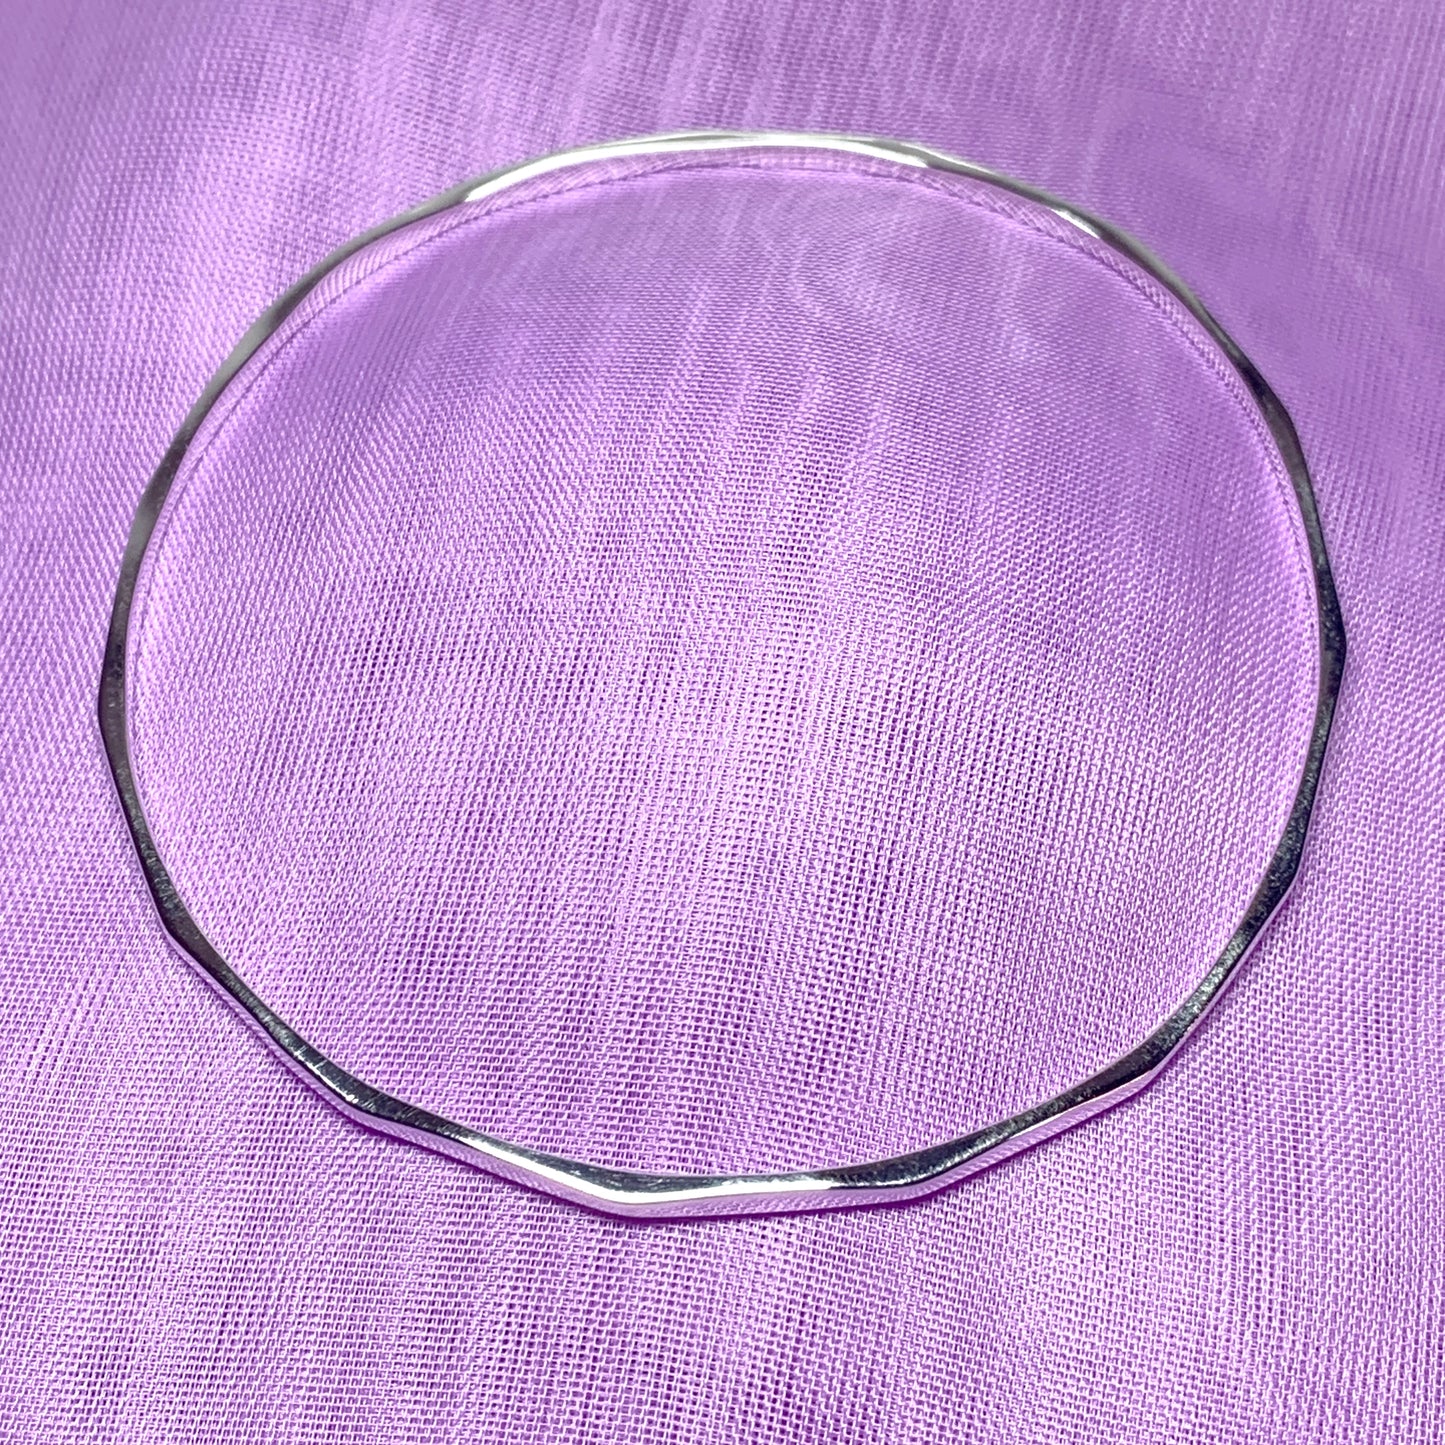 3 mm round faceted plain sterling silver polished slave bangle